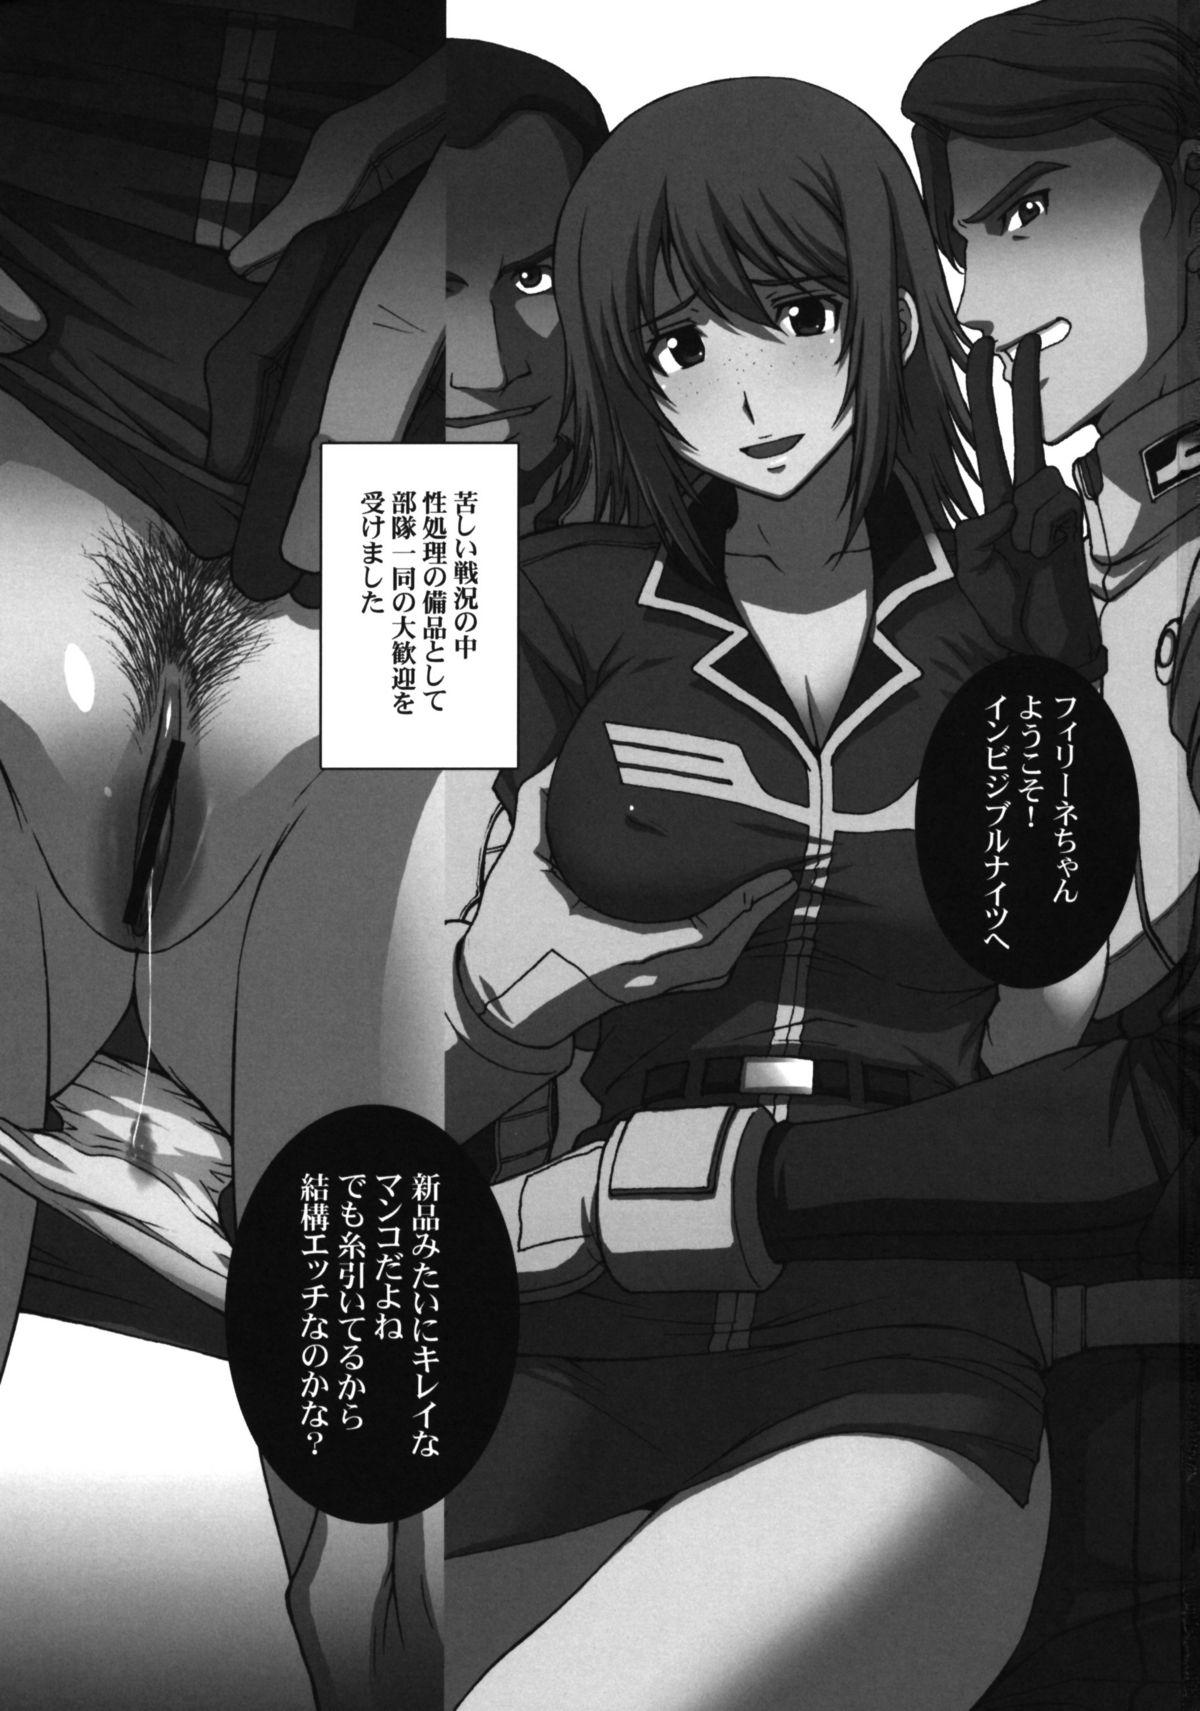 Abg ZEON LostWarChronicles "Invisible Knights no Nichijou" & "Elran Kanraku." - Gundam Mobile suit gundam lost war chronicles Footjob - Page 2